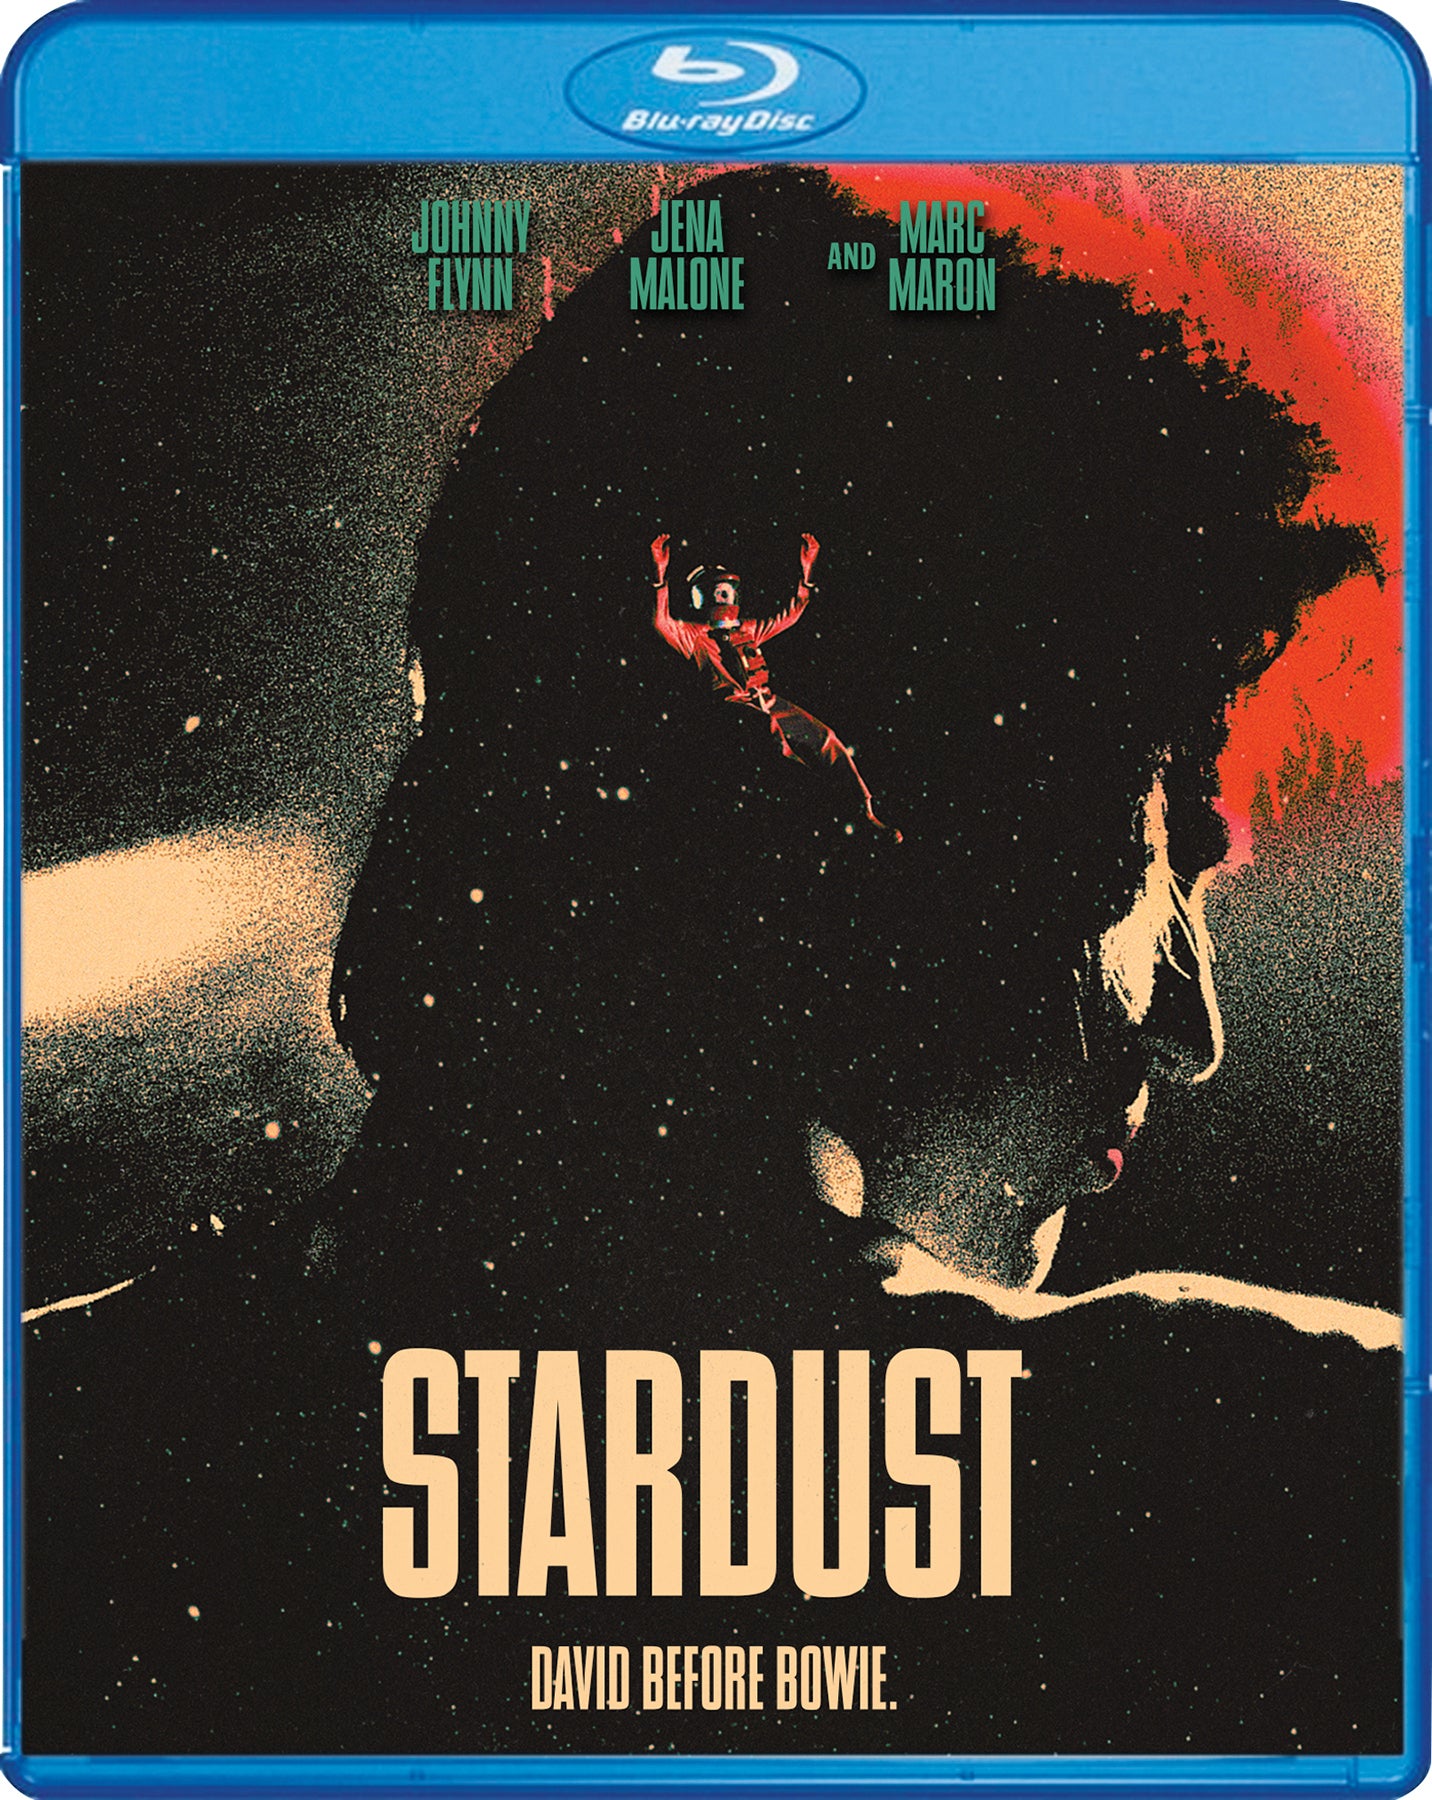 Stardust [Blu-ray] cover art